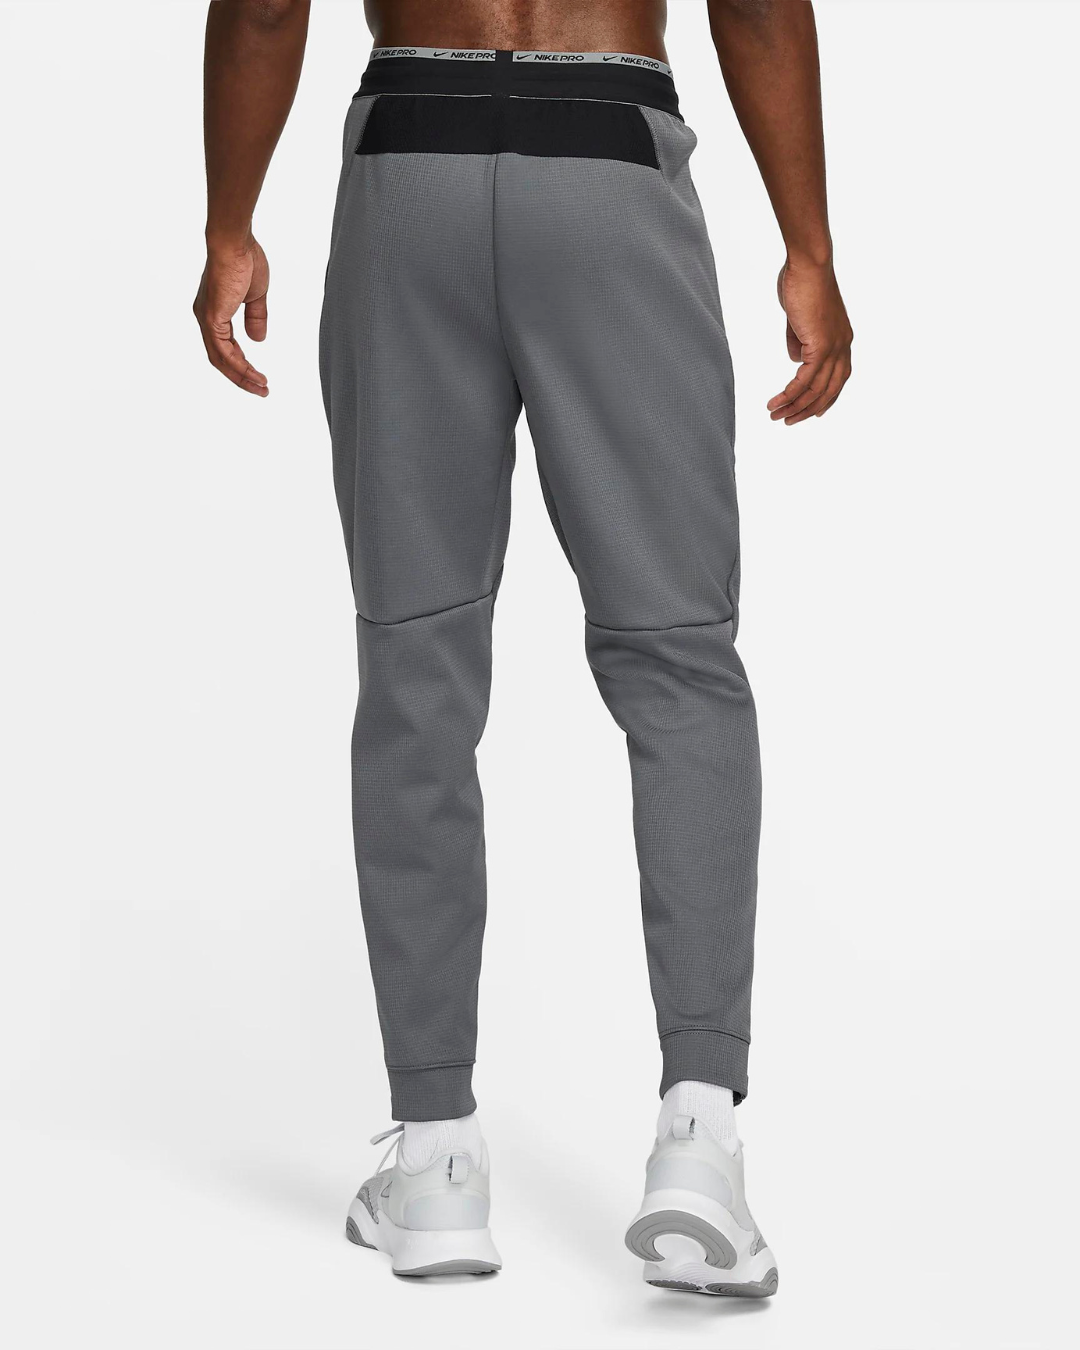 Pantalon Nike Therma Sphere - Grau